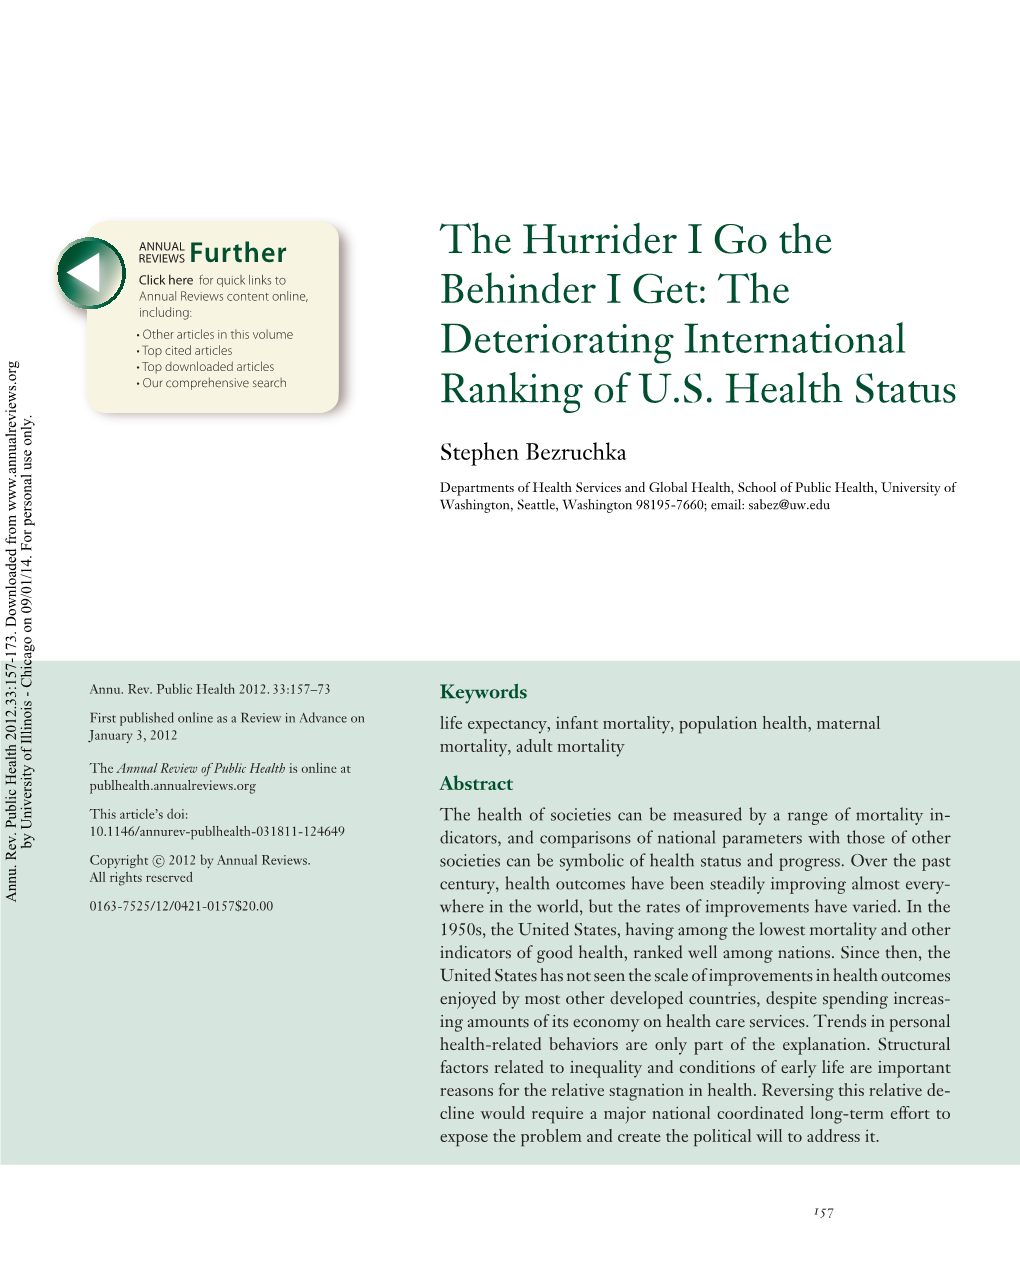 The Hurrider I Go the Behinder I Get: the Deteriorating International Ranking of U.S. Health Status